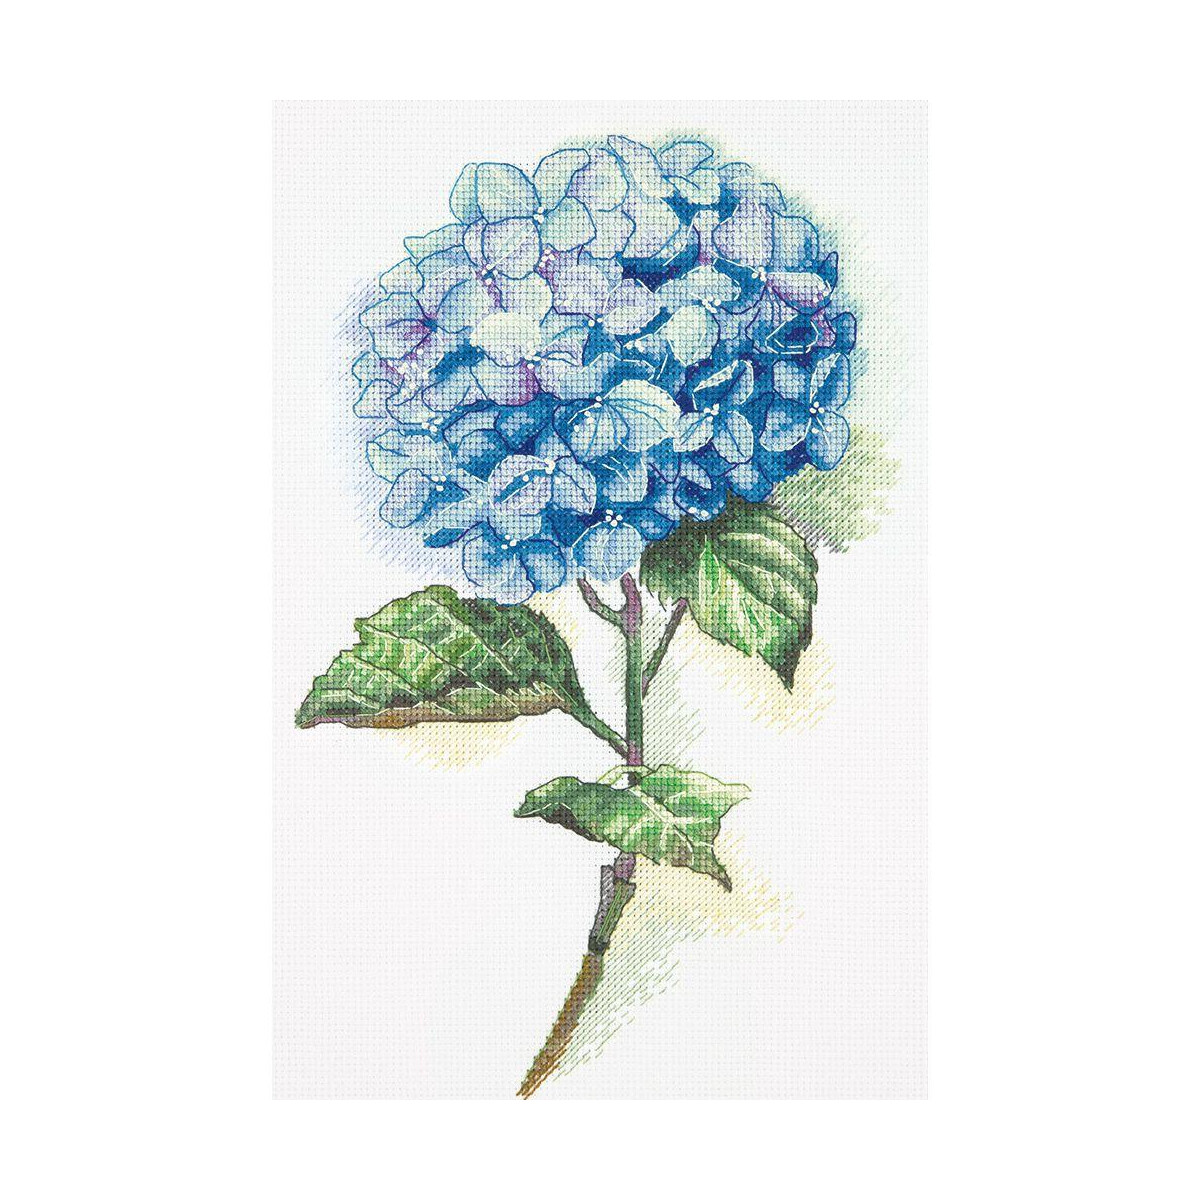 Panna kruissteek set "Blauwe hortensia"...